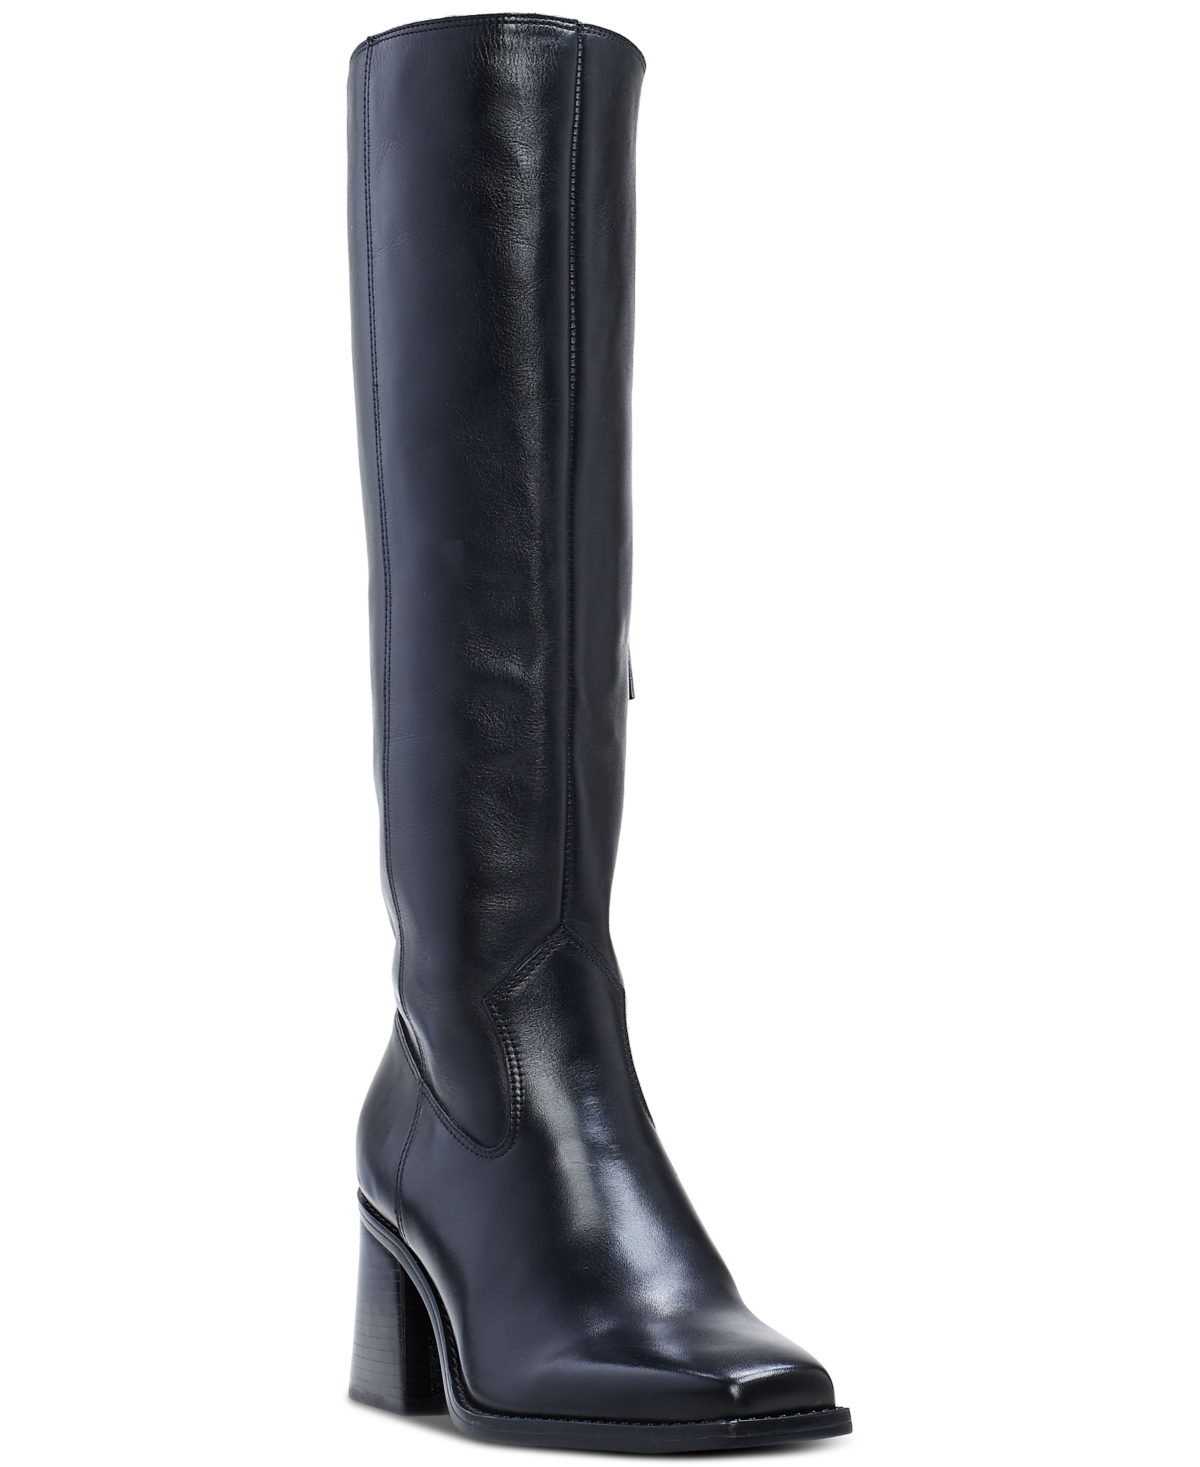 Sangeti Snip-Toe Block-Heel Tall Boots - Golden Walnut Leather